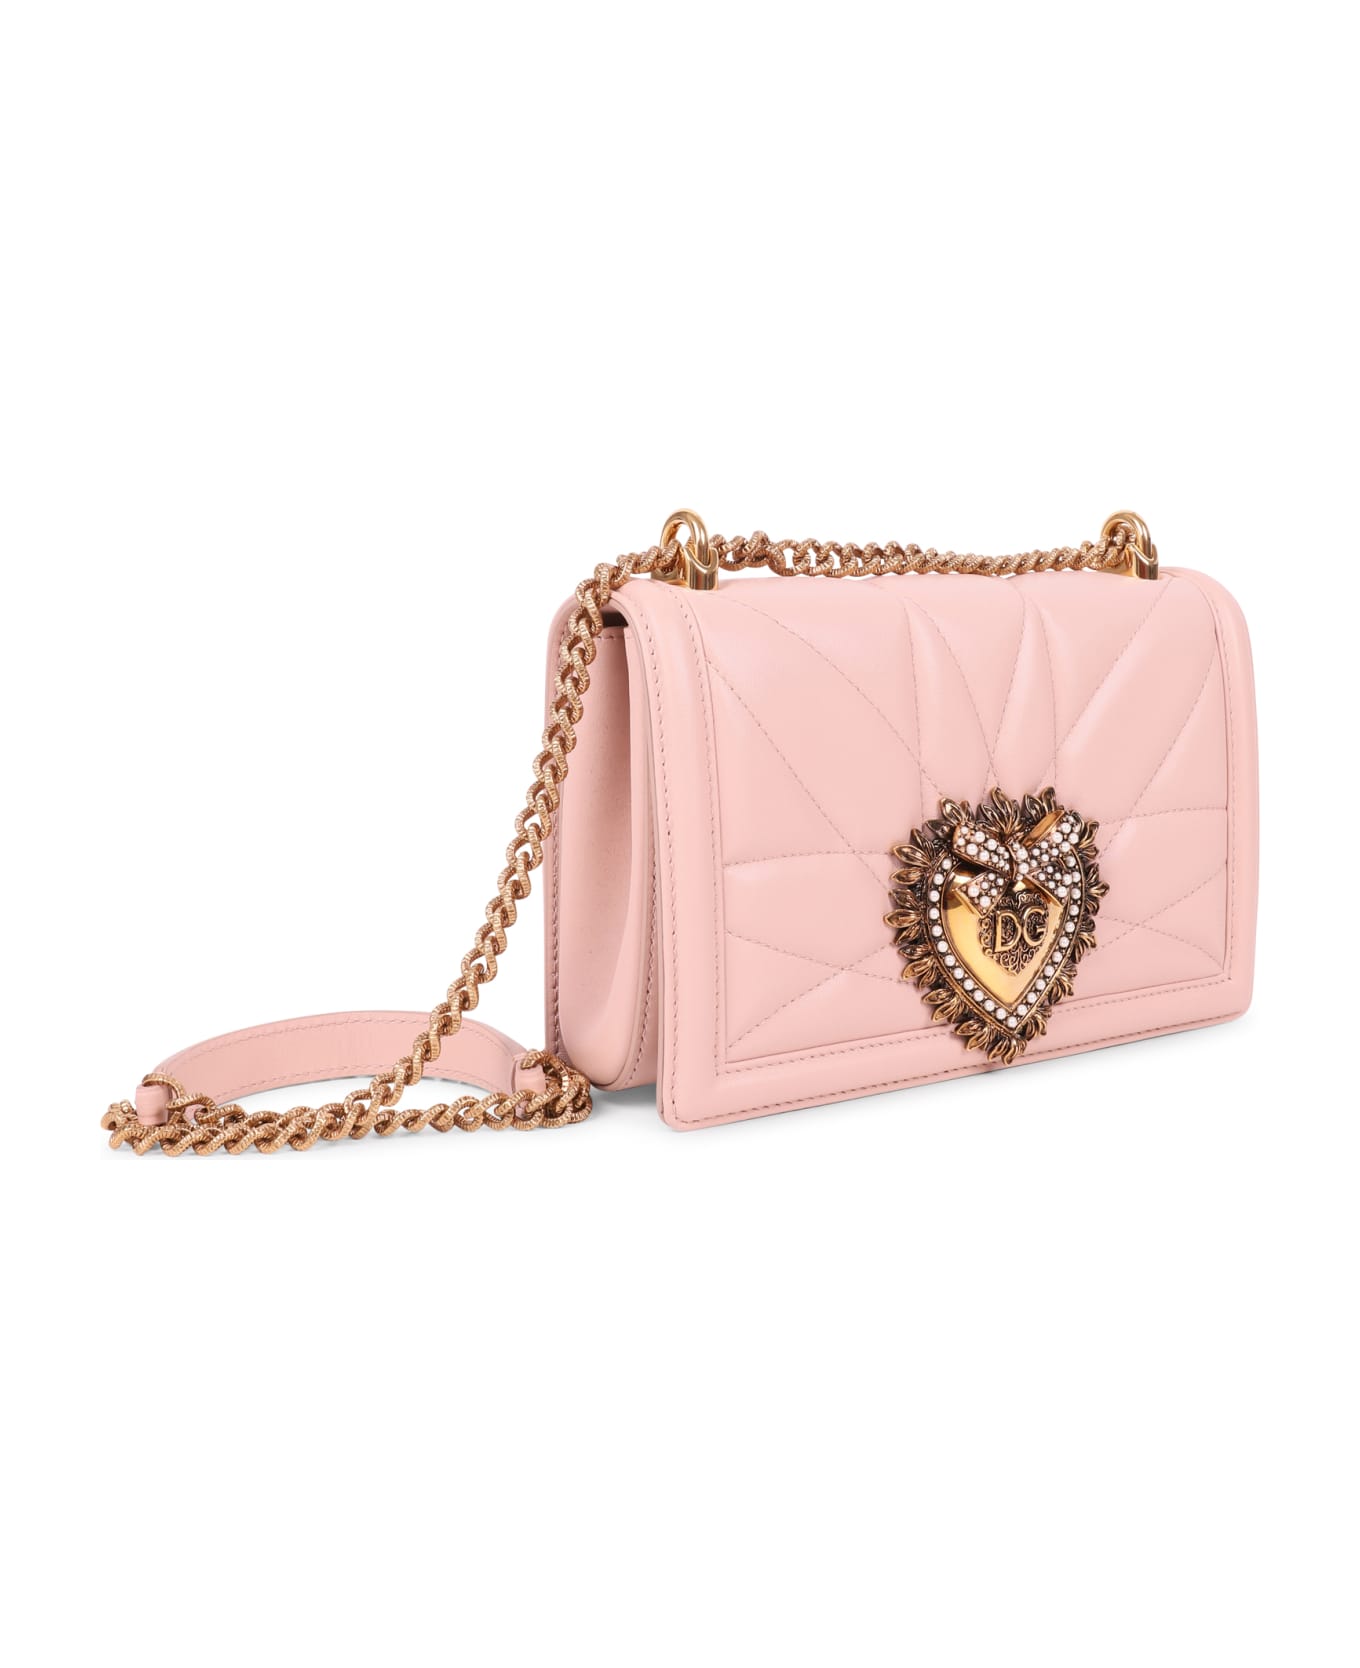 Dolce & Gabbana Blush Devotion Bag M | italist